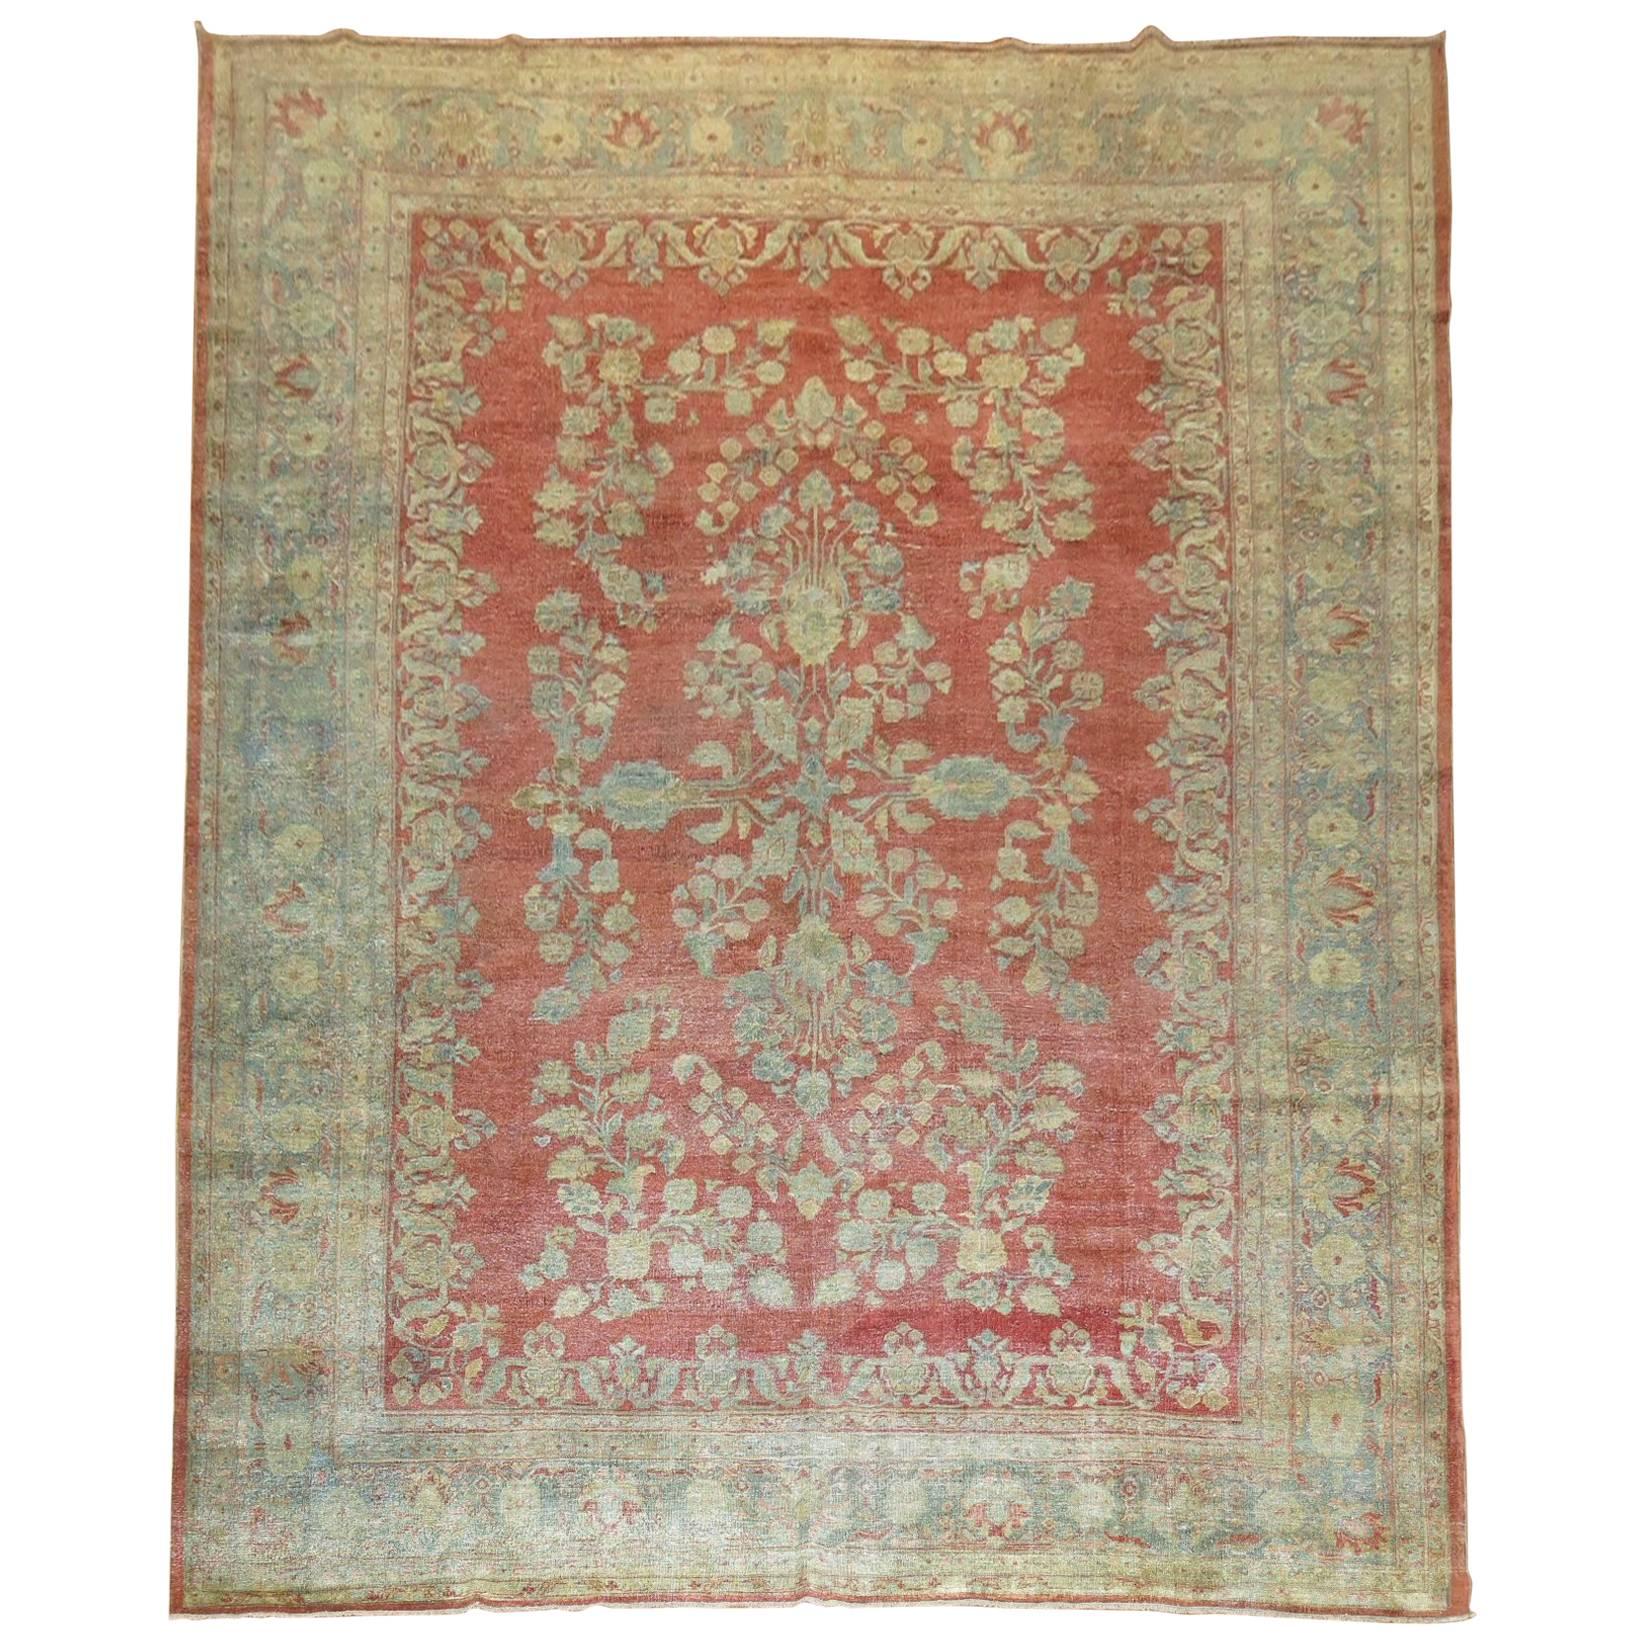 Decorative Persian Sarouk Carpet For Sale